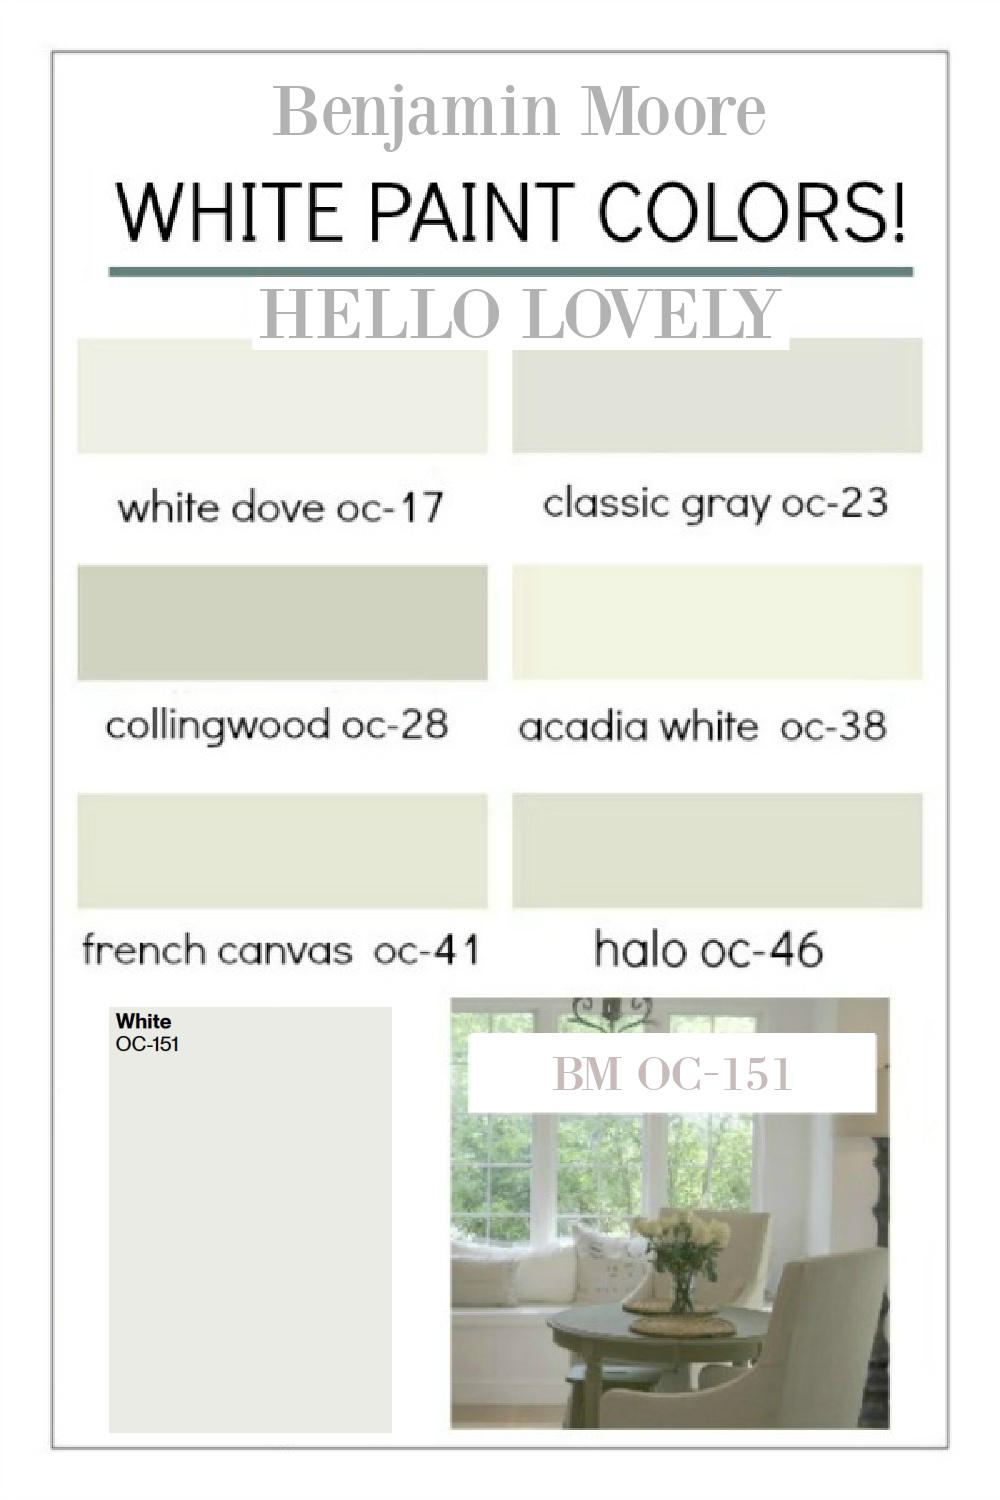 Benjamin Moore White Paint Colors - favorites from Hello Lovely Studio. #whitepaintcolors #benjaminmoorewhite